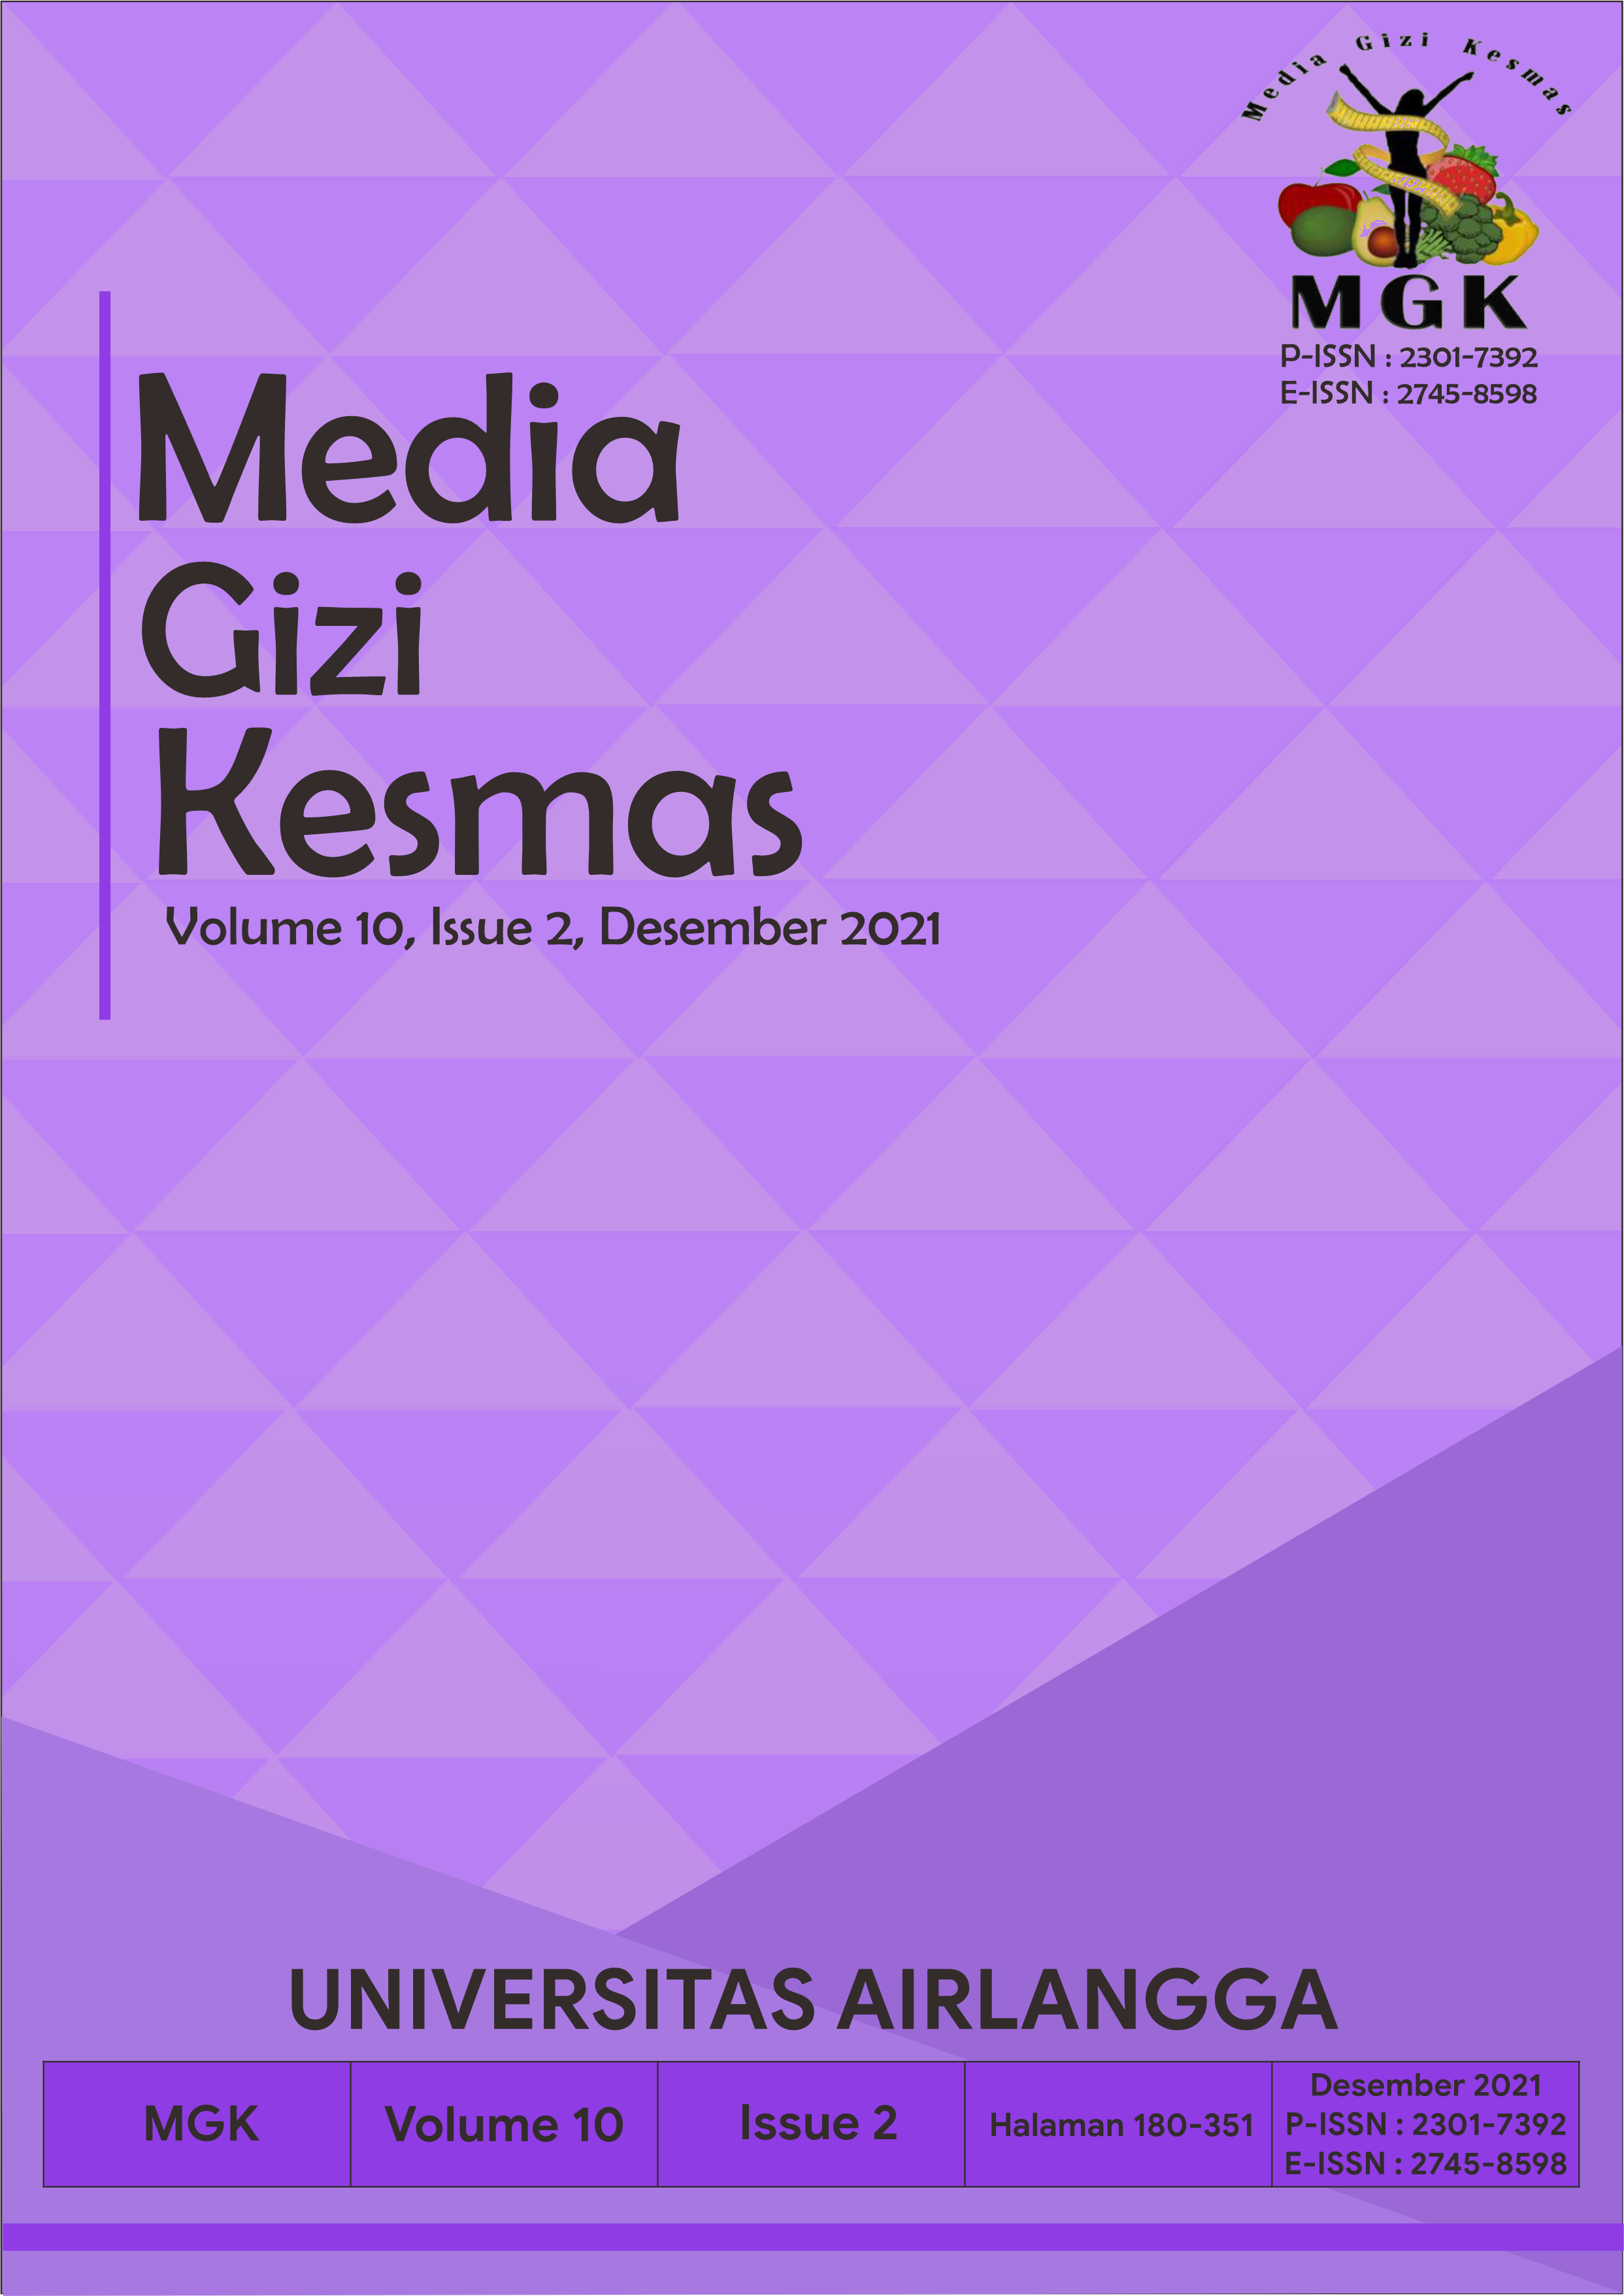 						View Vol. 10 No. 2 (2021): MEDIA GIZI KESMAS (DECEMBER 2021)
					